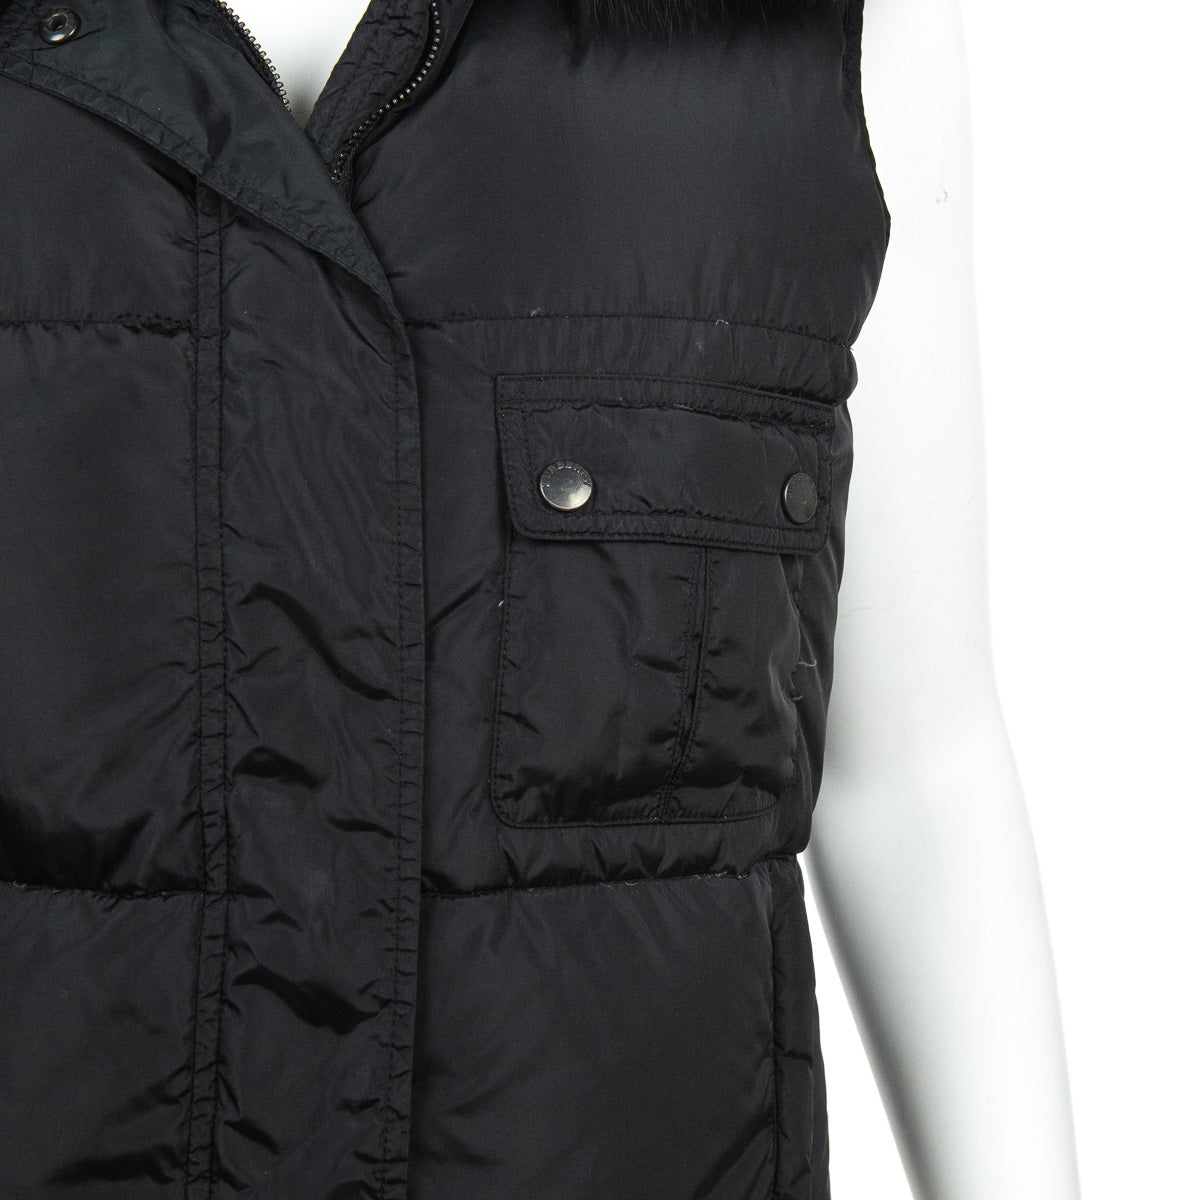 Burberry Black Sleeveless Fur Trim Puffer Vest Size S - Love that Bag etc - Preowned Authentic Designer Handbags & Preloved Fashions